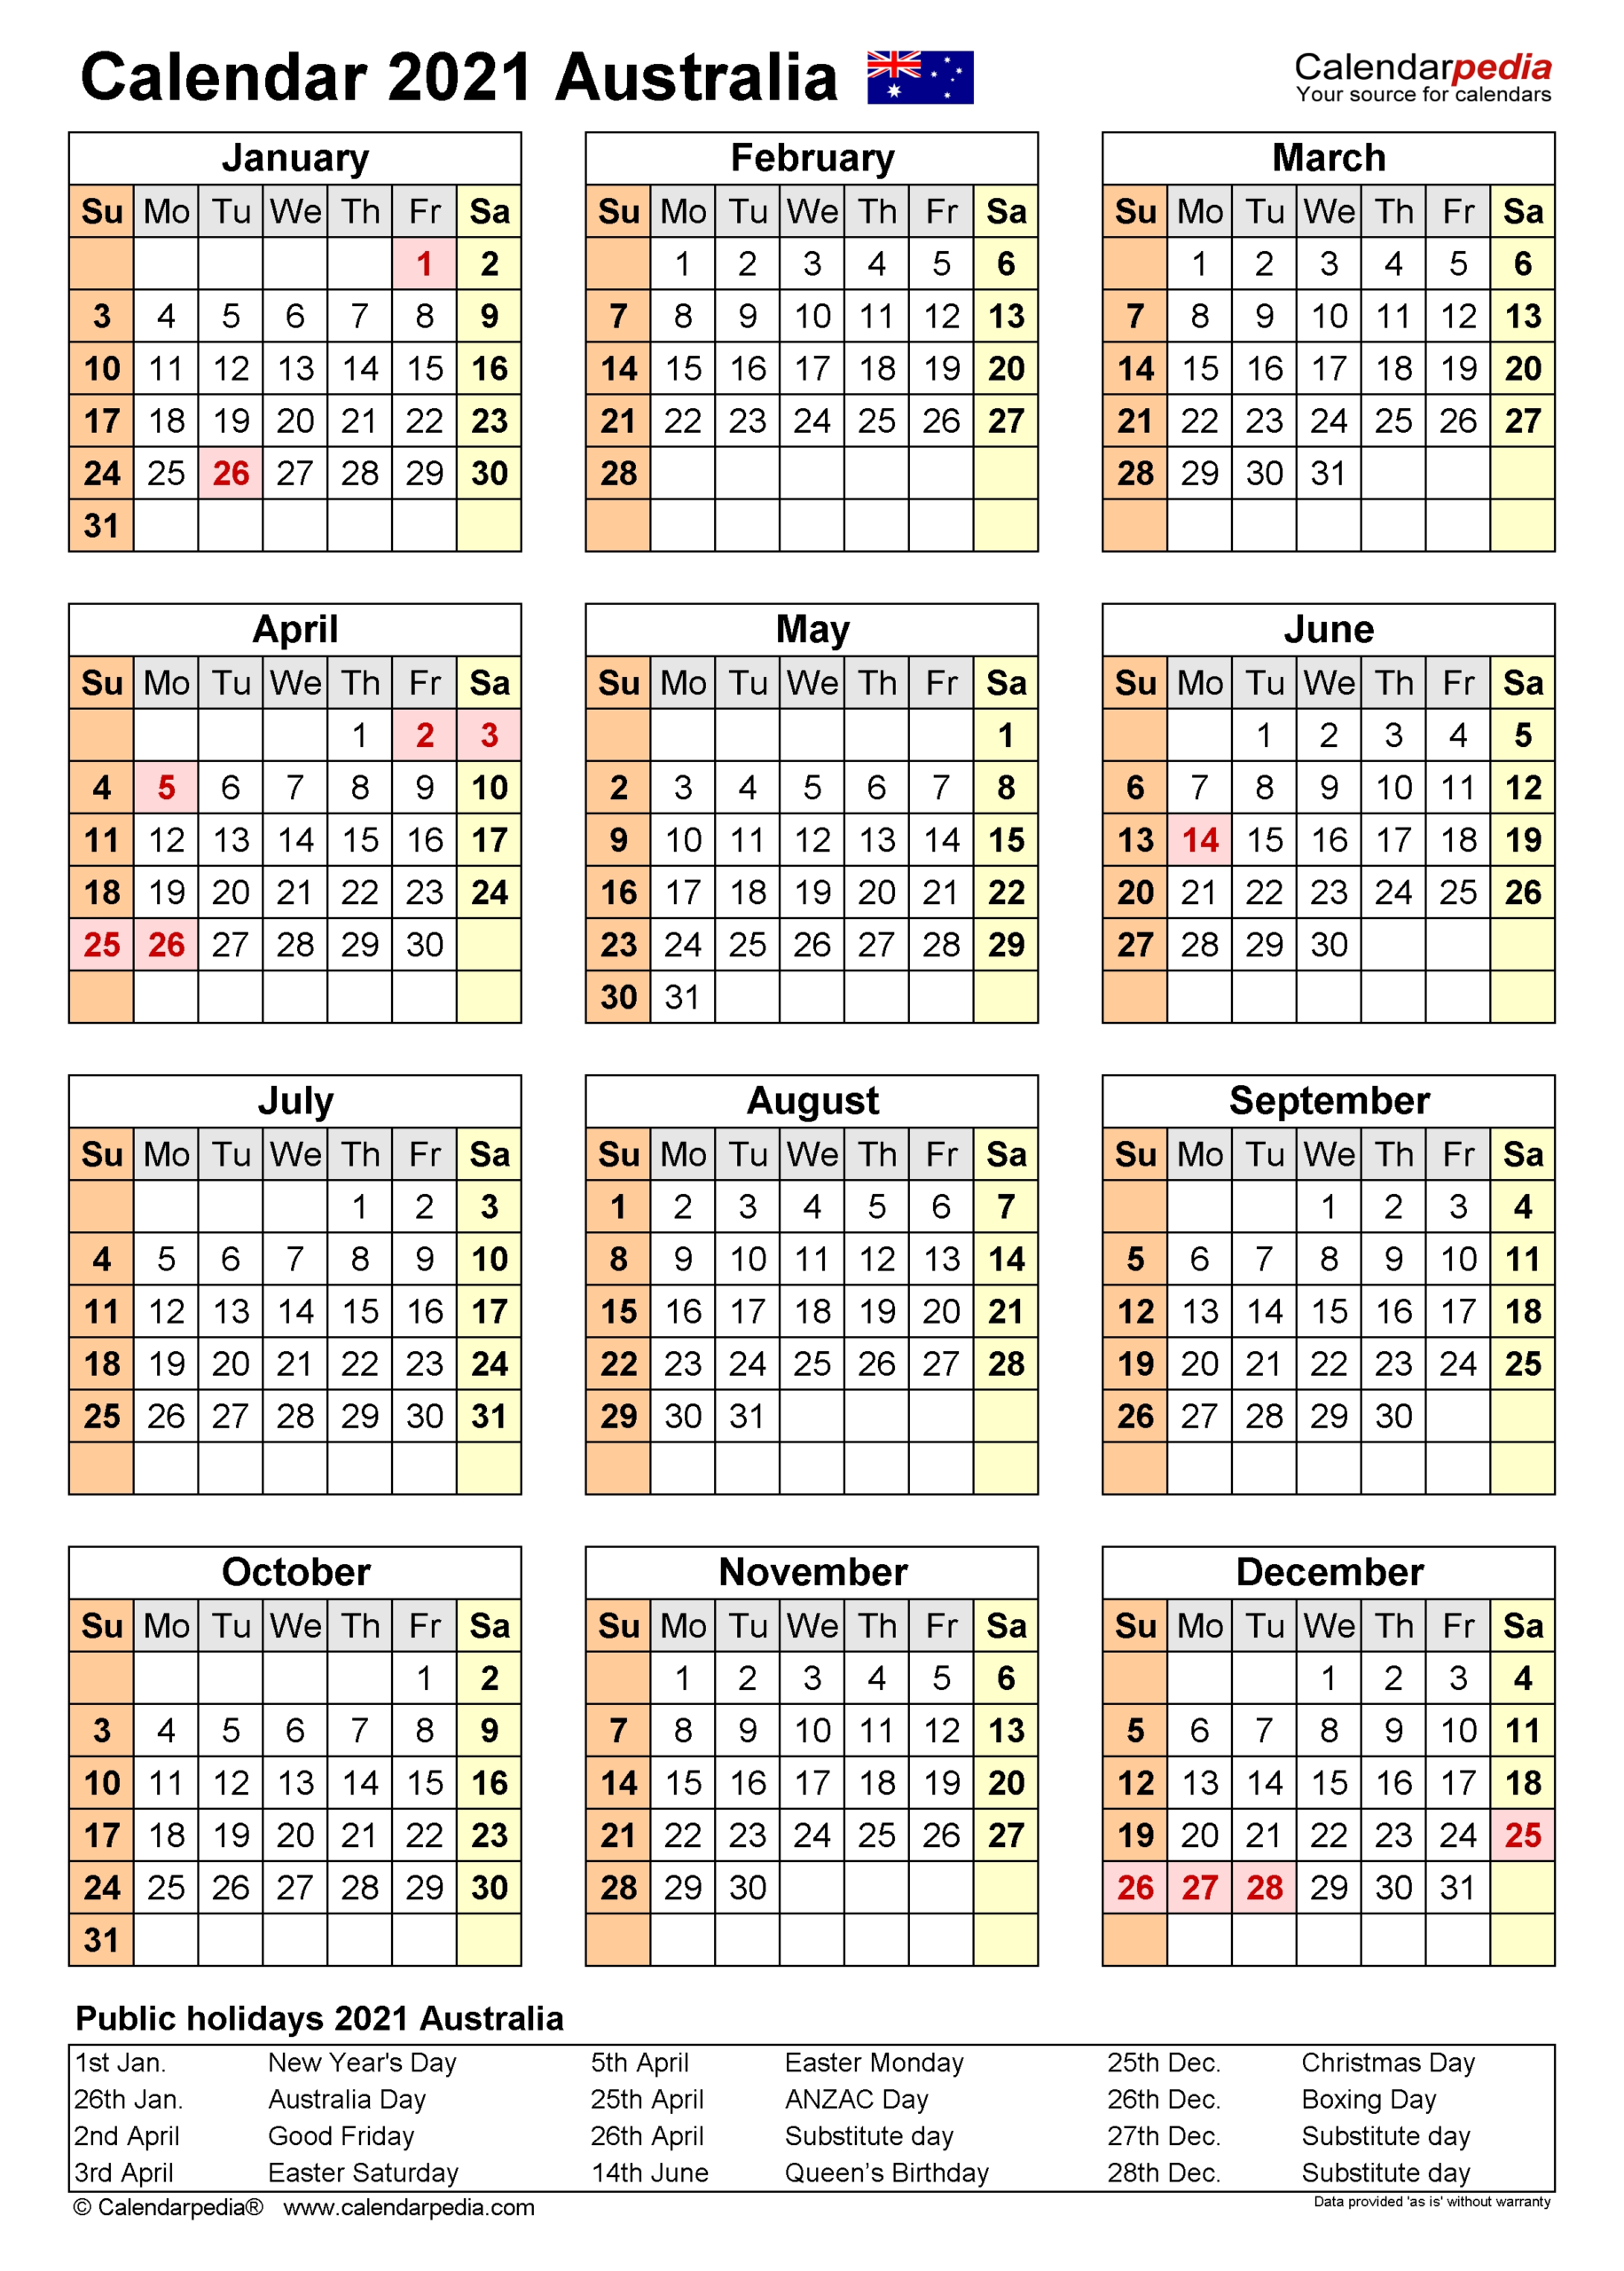 Depo Provera Calendar 2021 Printable | Calendar Printables ...